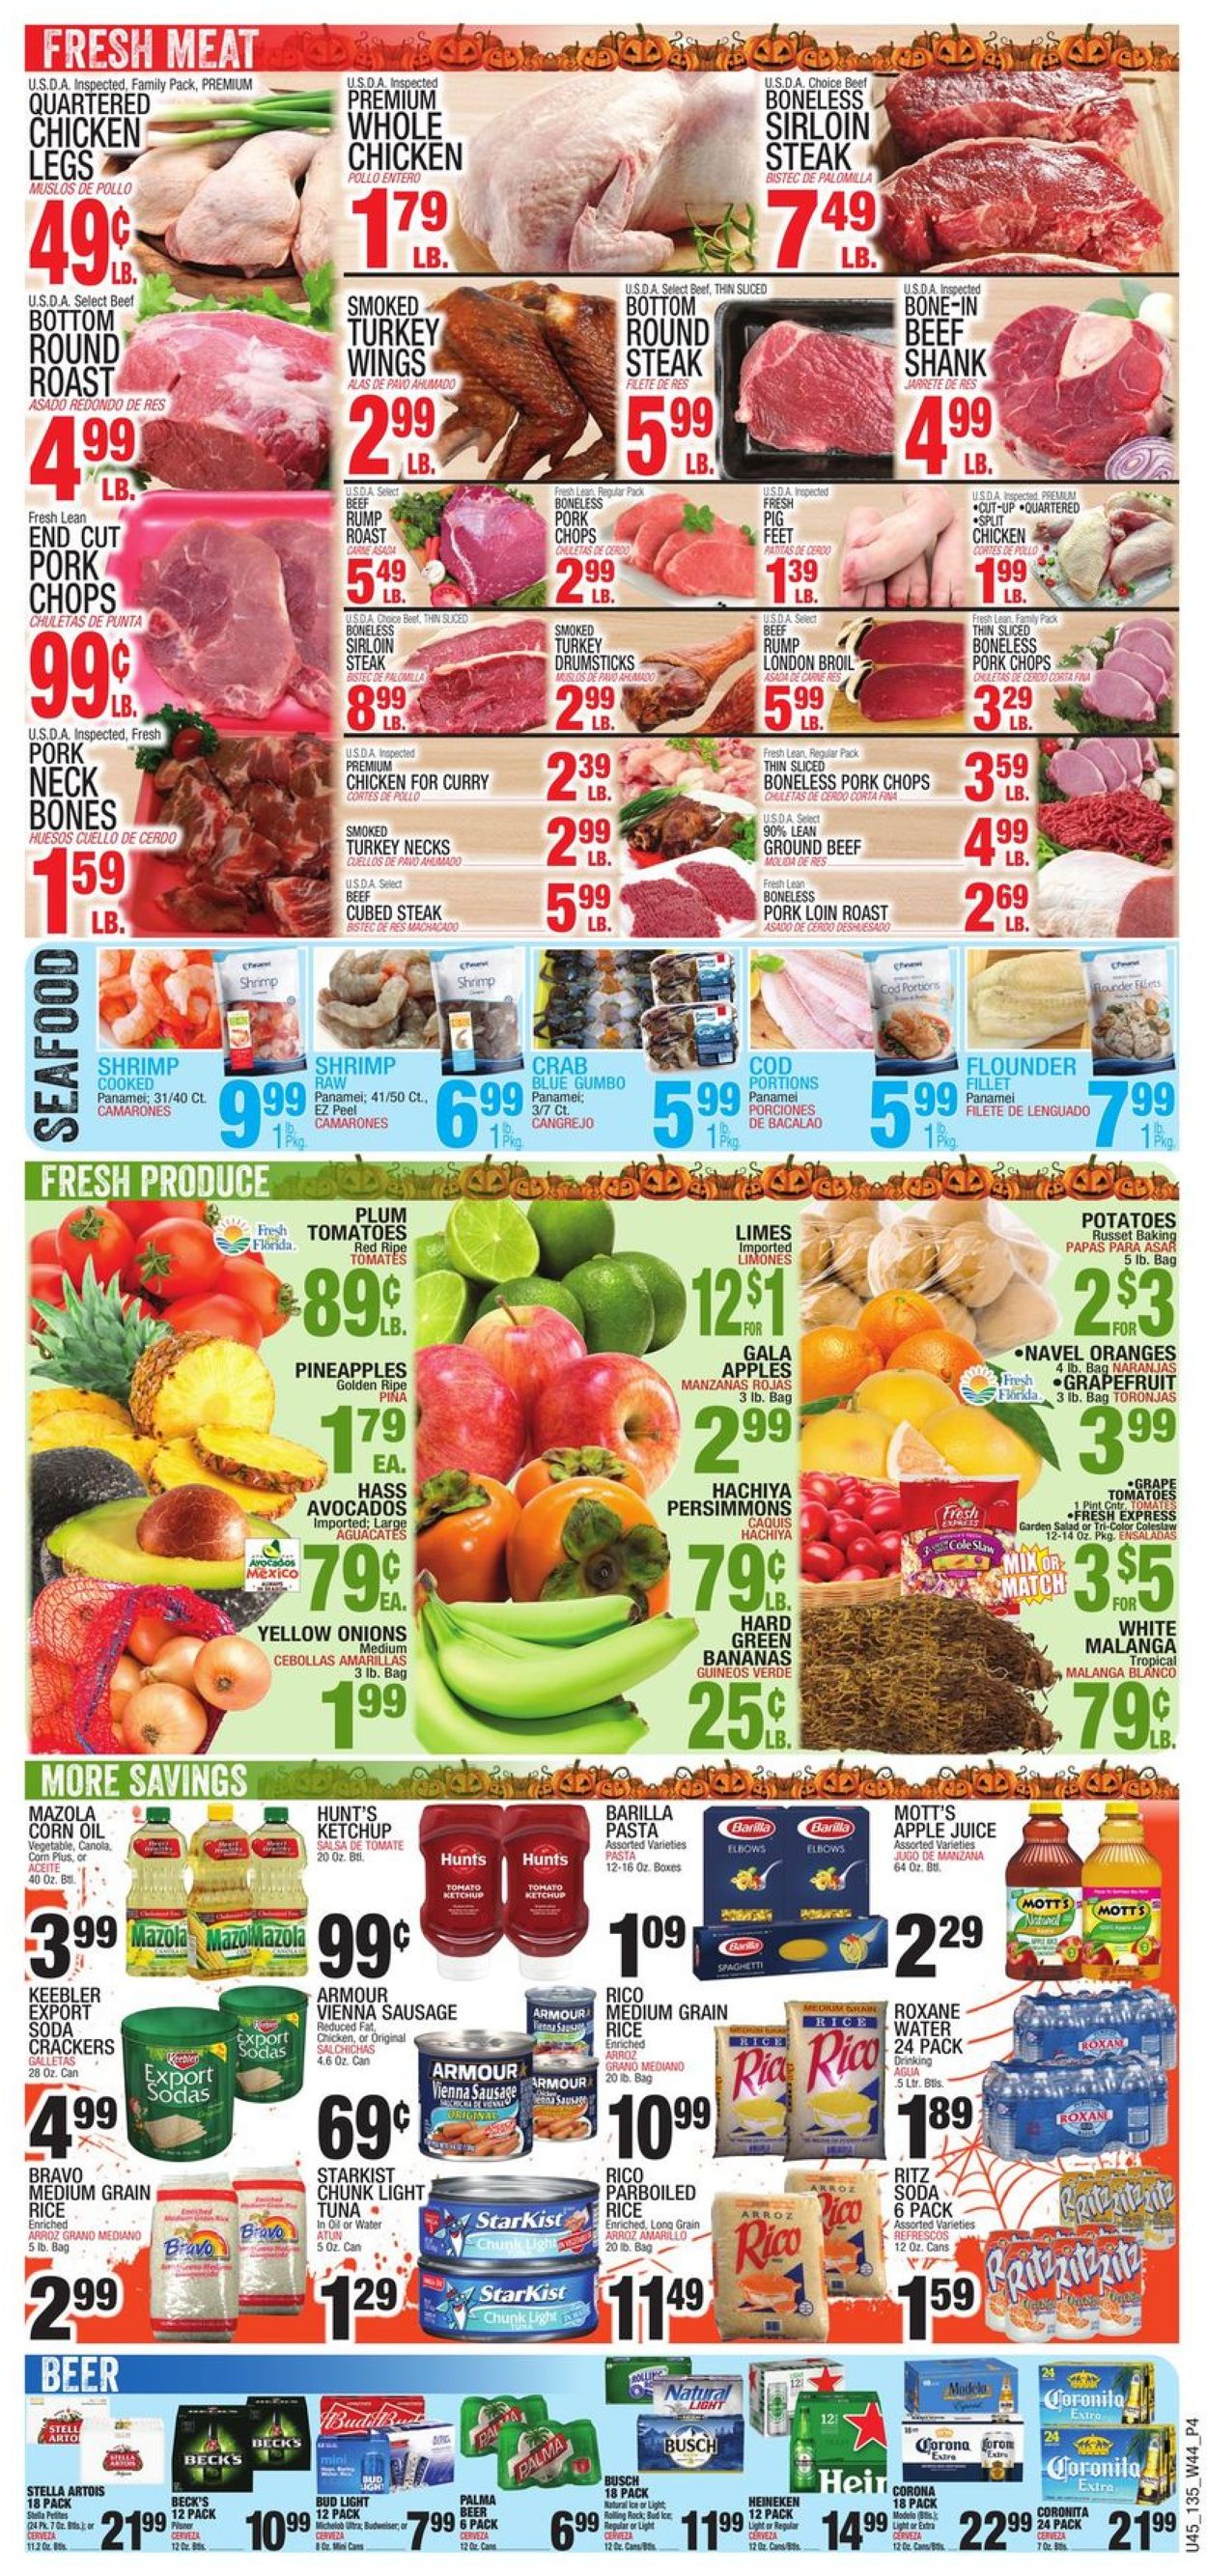 Catalogue Bravo Supermarkets from 10/28/2021